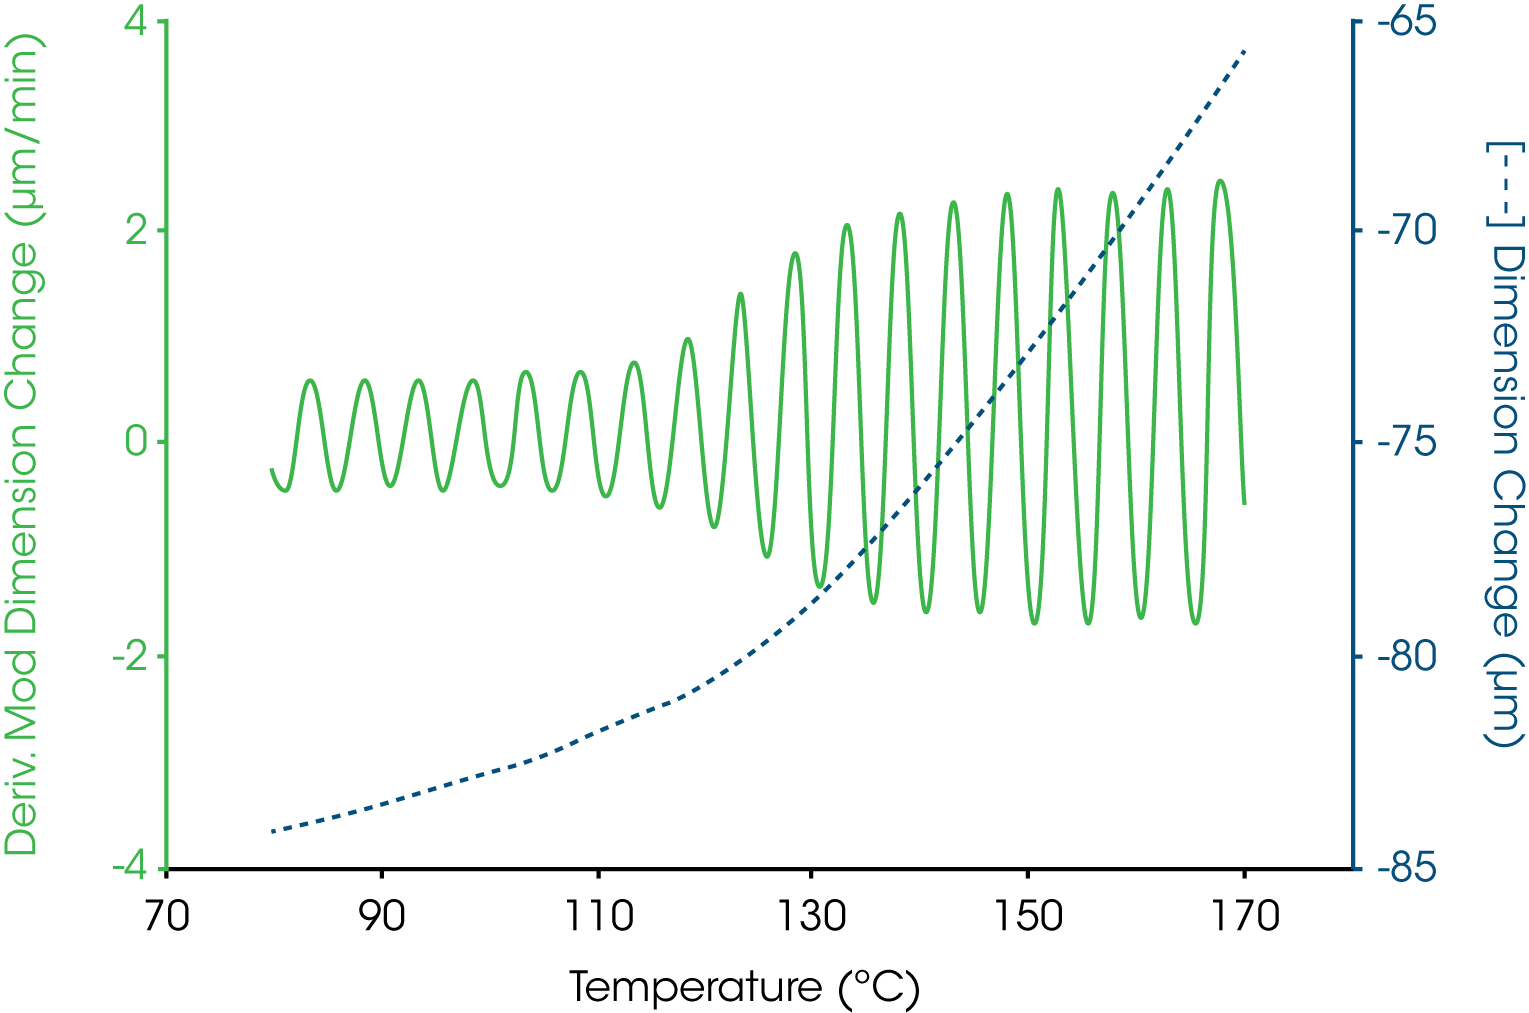 Figure 2. Lissajou Plot to Determine Phase Lag